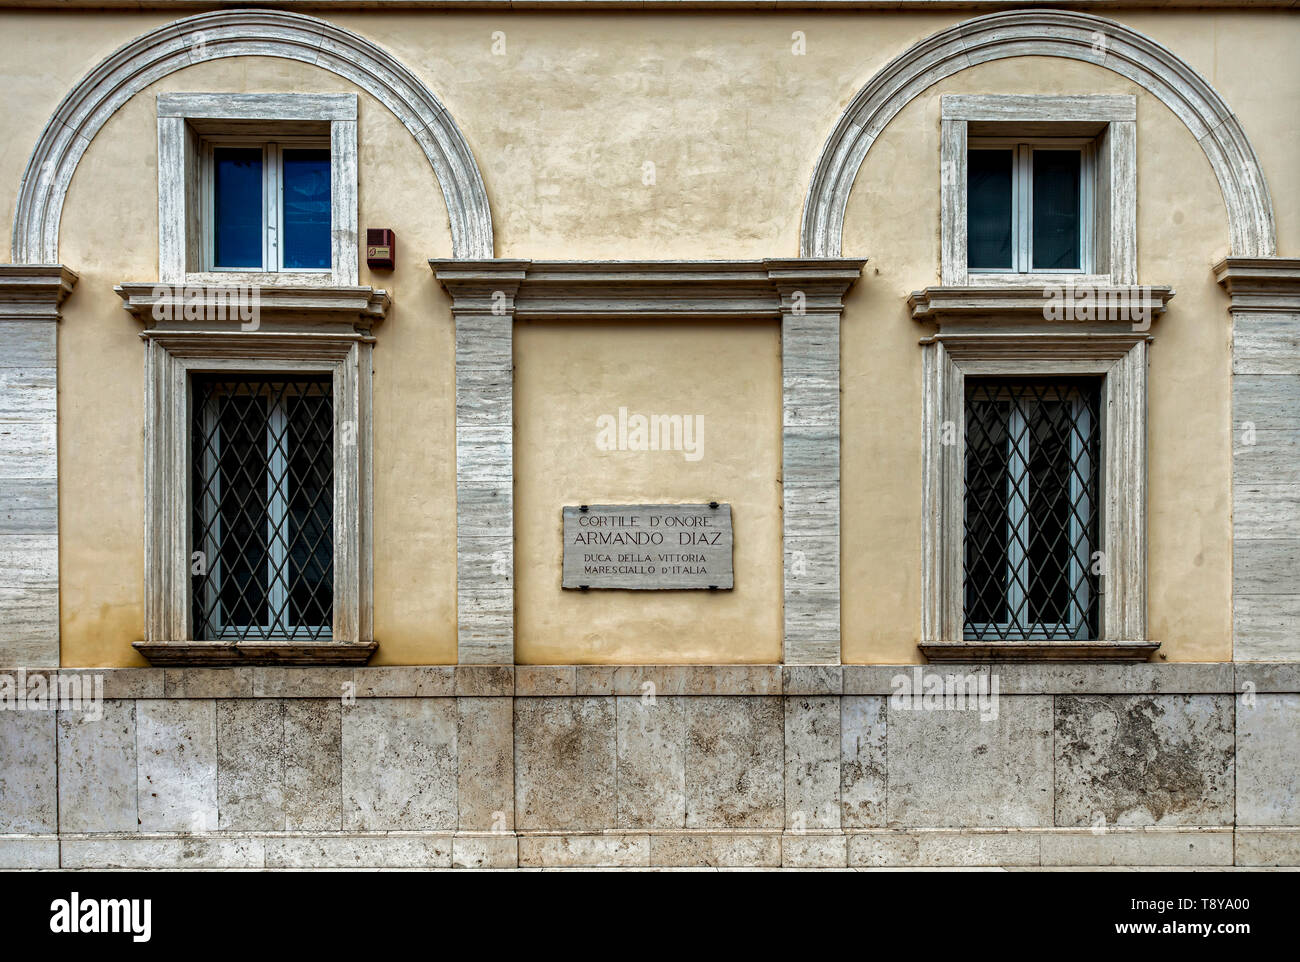 Zu den allgemeinen Armando Diaz im Innenhof des sechzehnten Jahrhunderts gewidmet Platte - Palazzo Salviati, heute das Centro Alti Studi della Difesa, in Rom, Italien Stockfoto